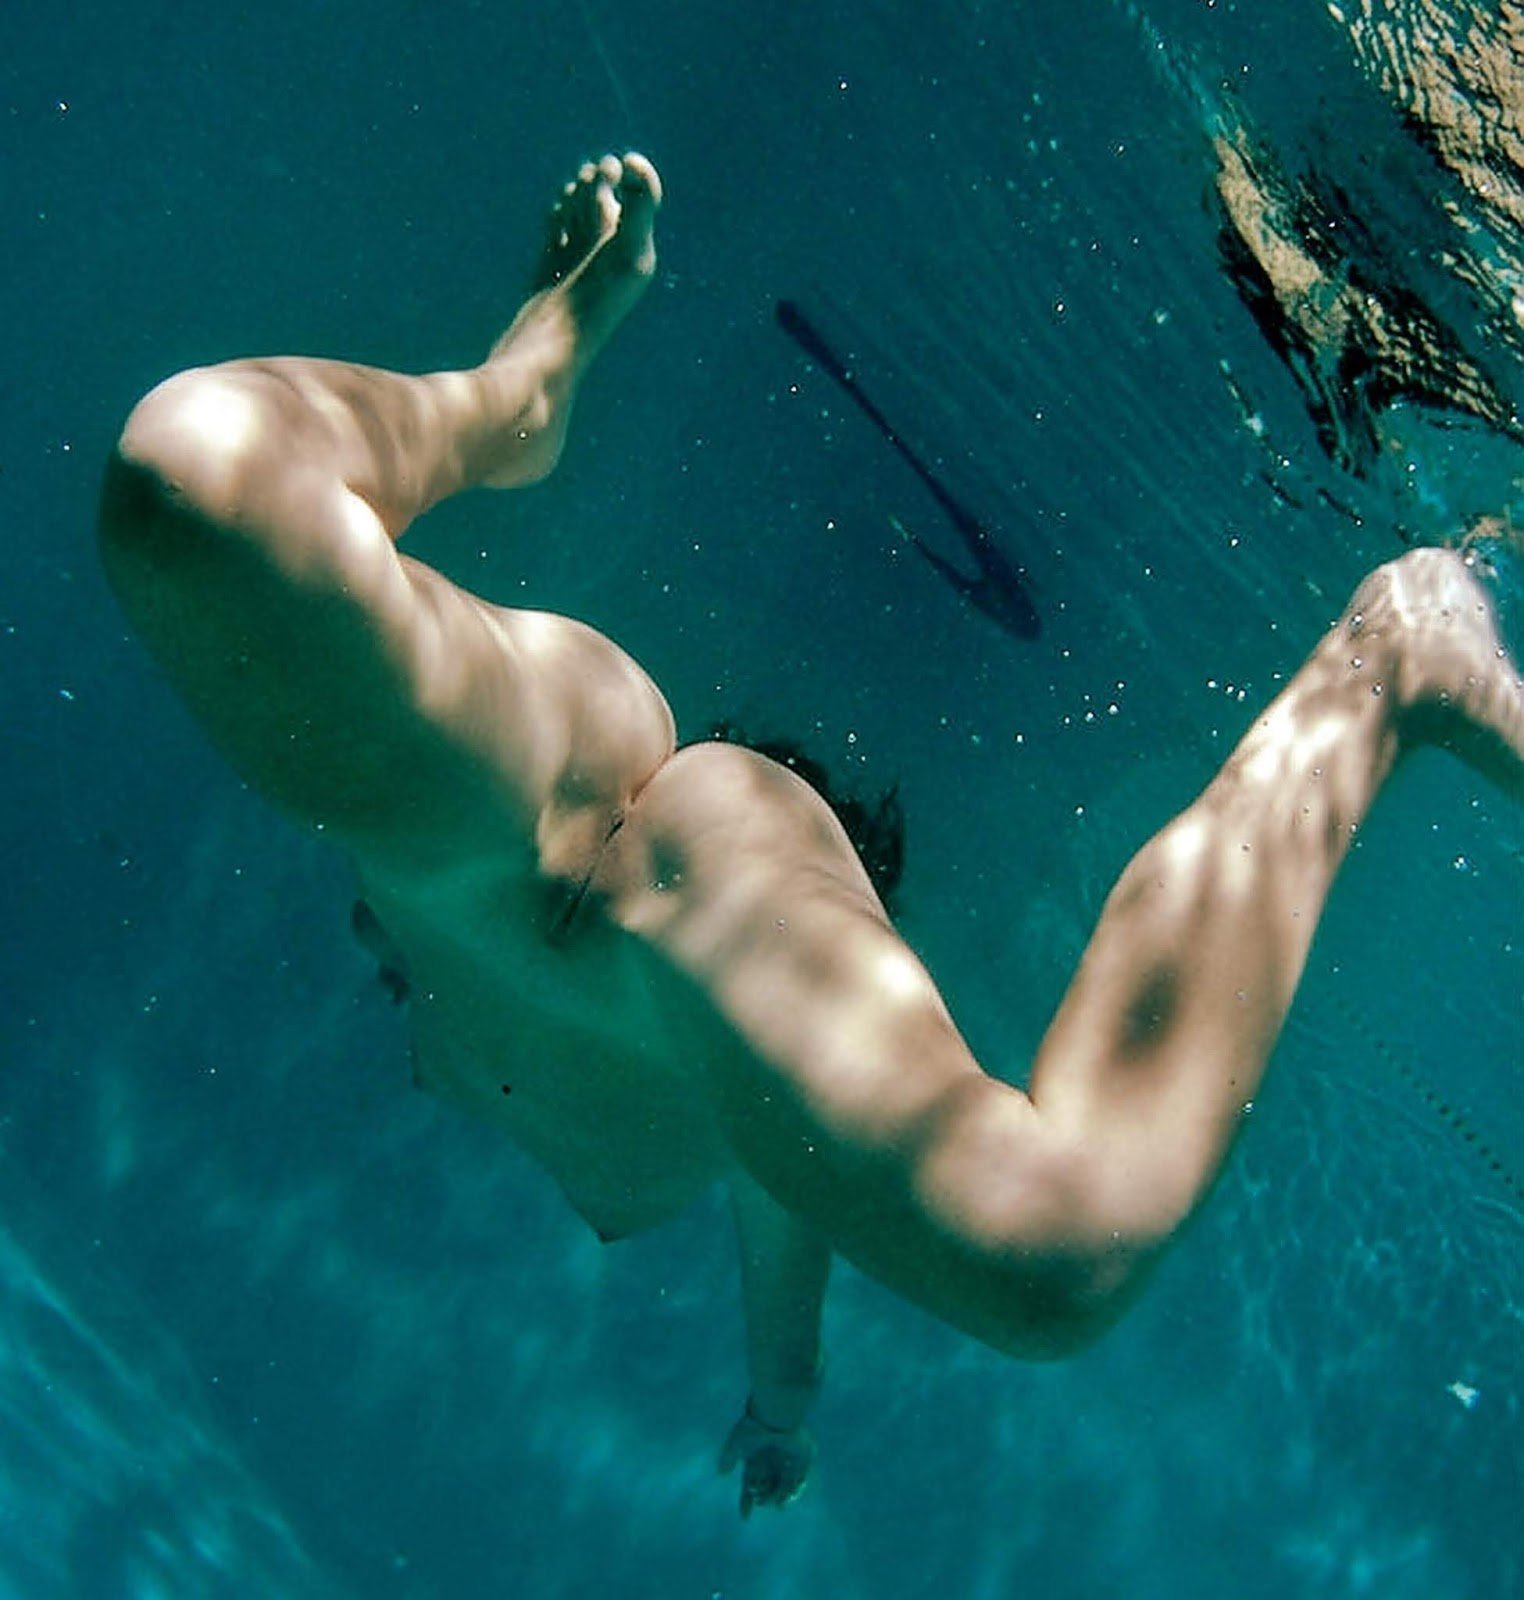 bethany gottshall add women swimming nude photo